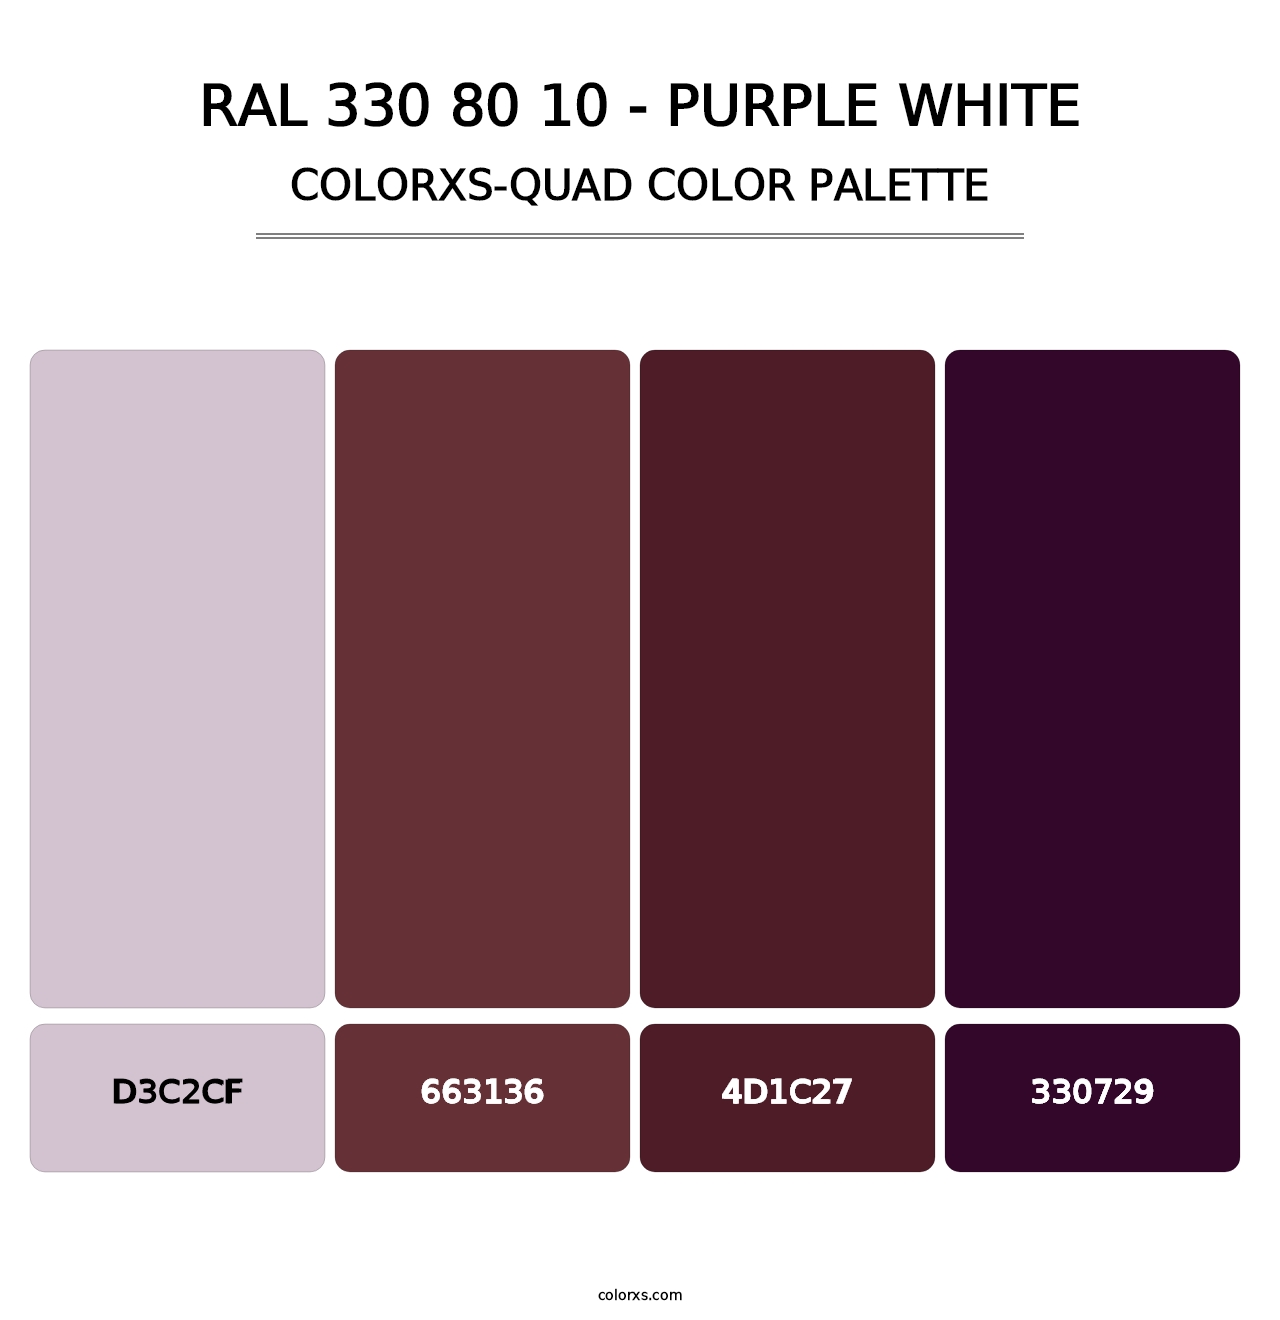 RAL 330 80 10 - Purple White - Colorxs Quad Palette